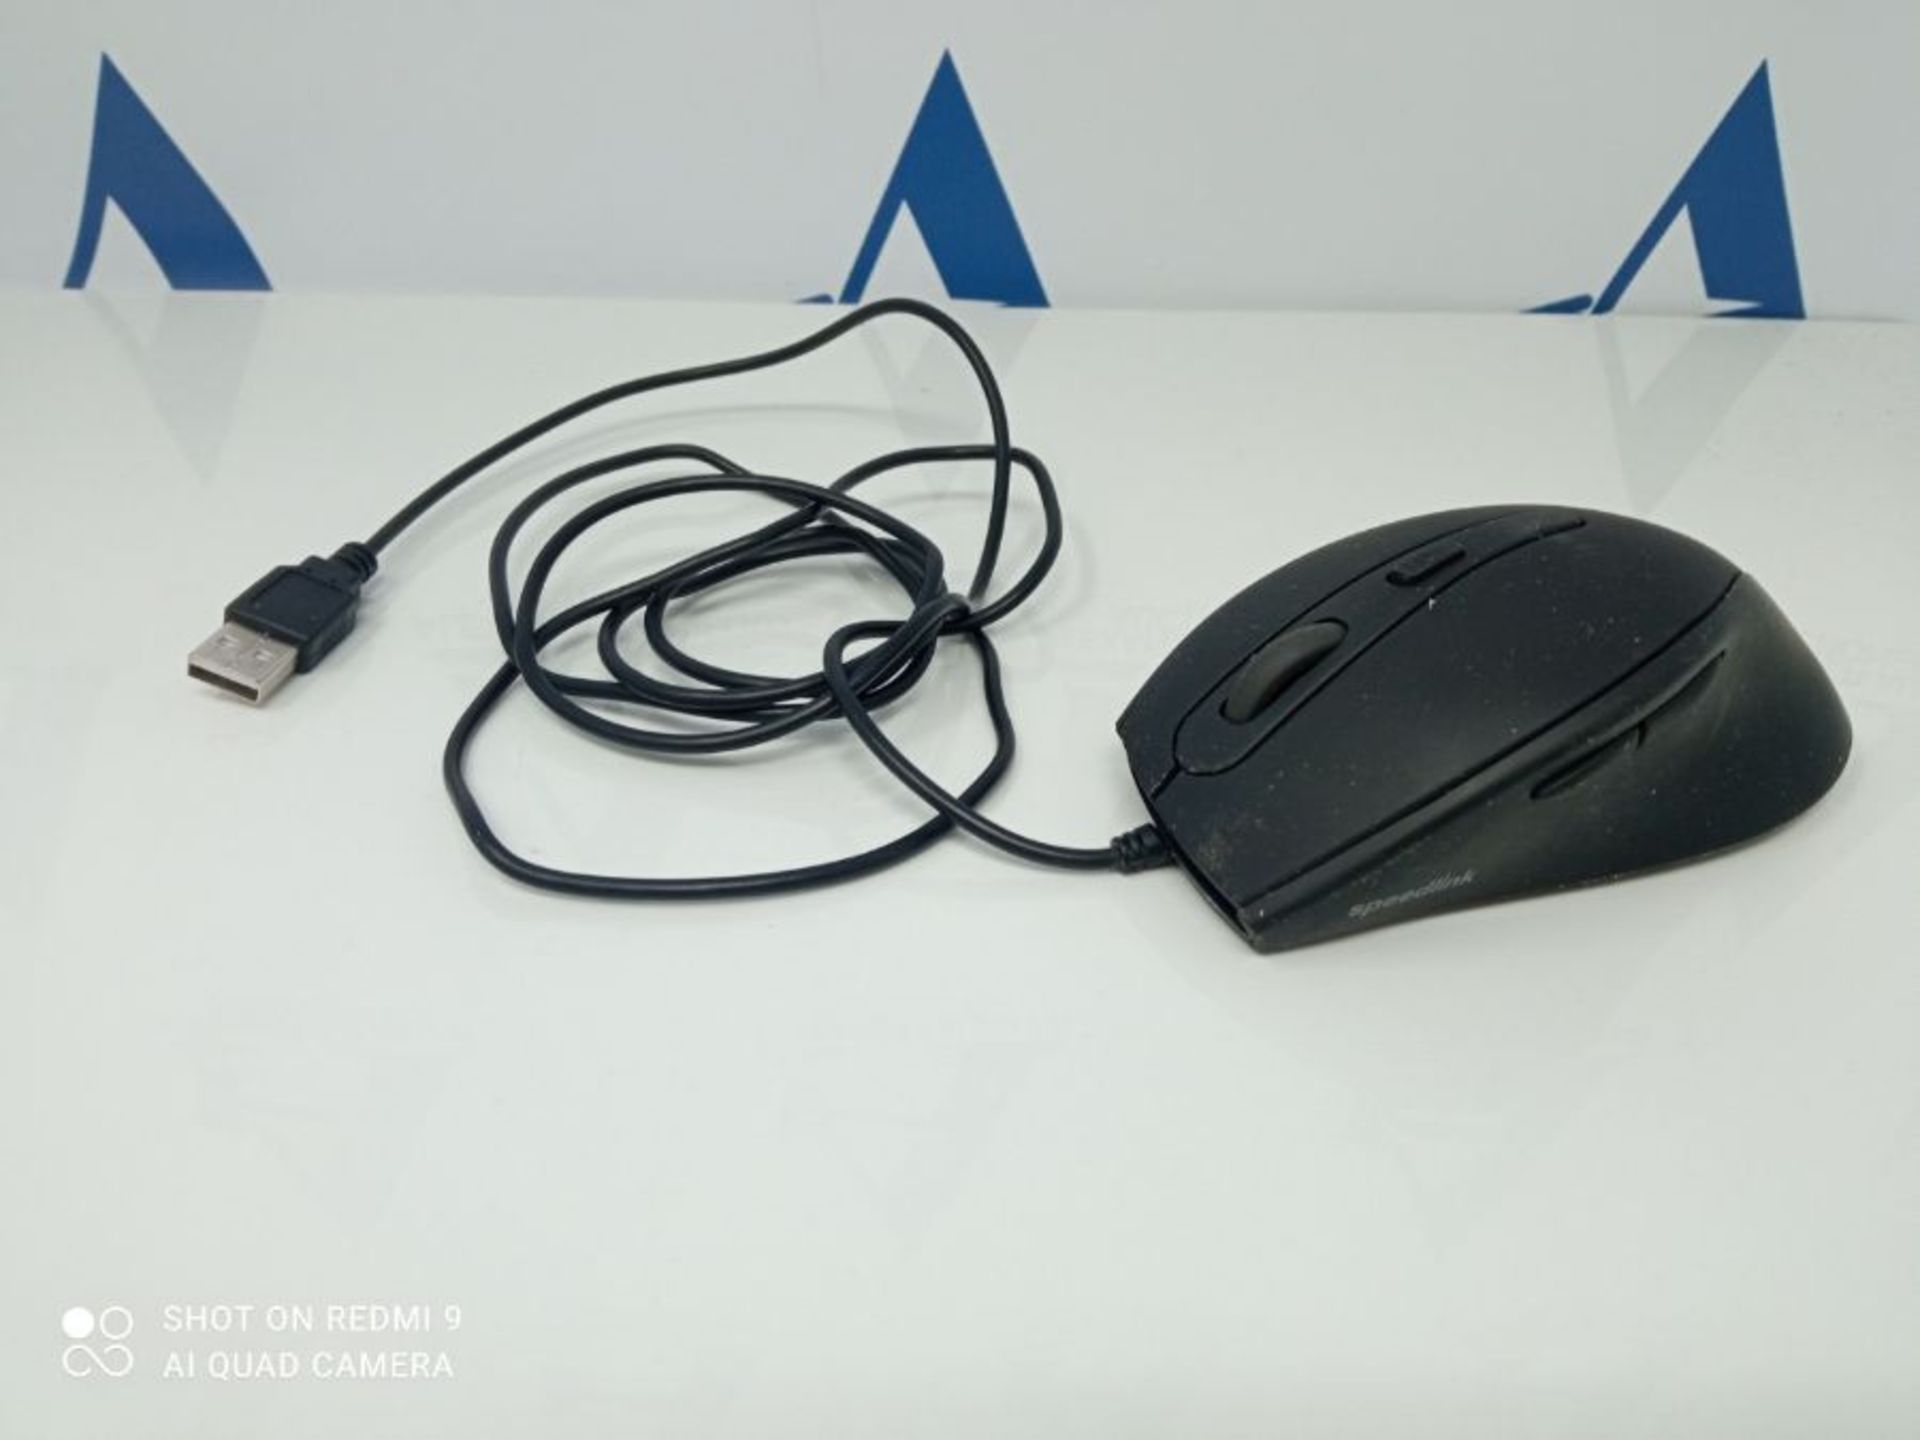 Speedlink AXON Silent Optical Mouse - USB Mouse- Ergonomic, Rubber/Black - Image 2 of 2